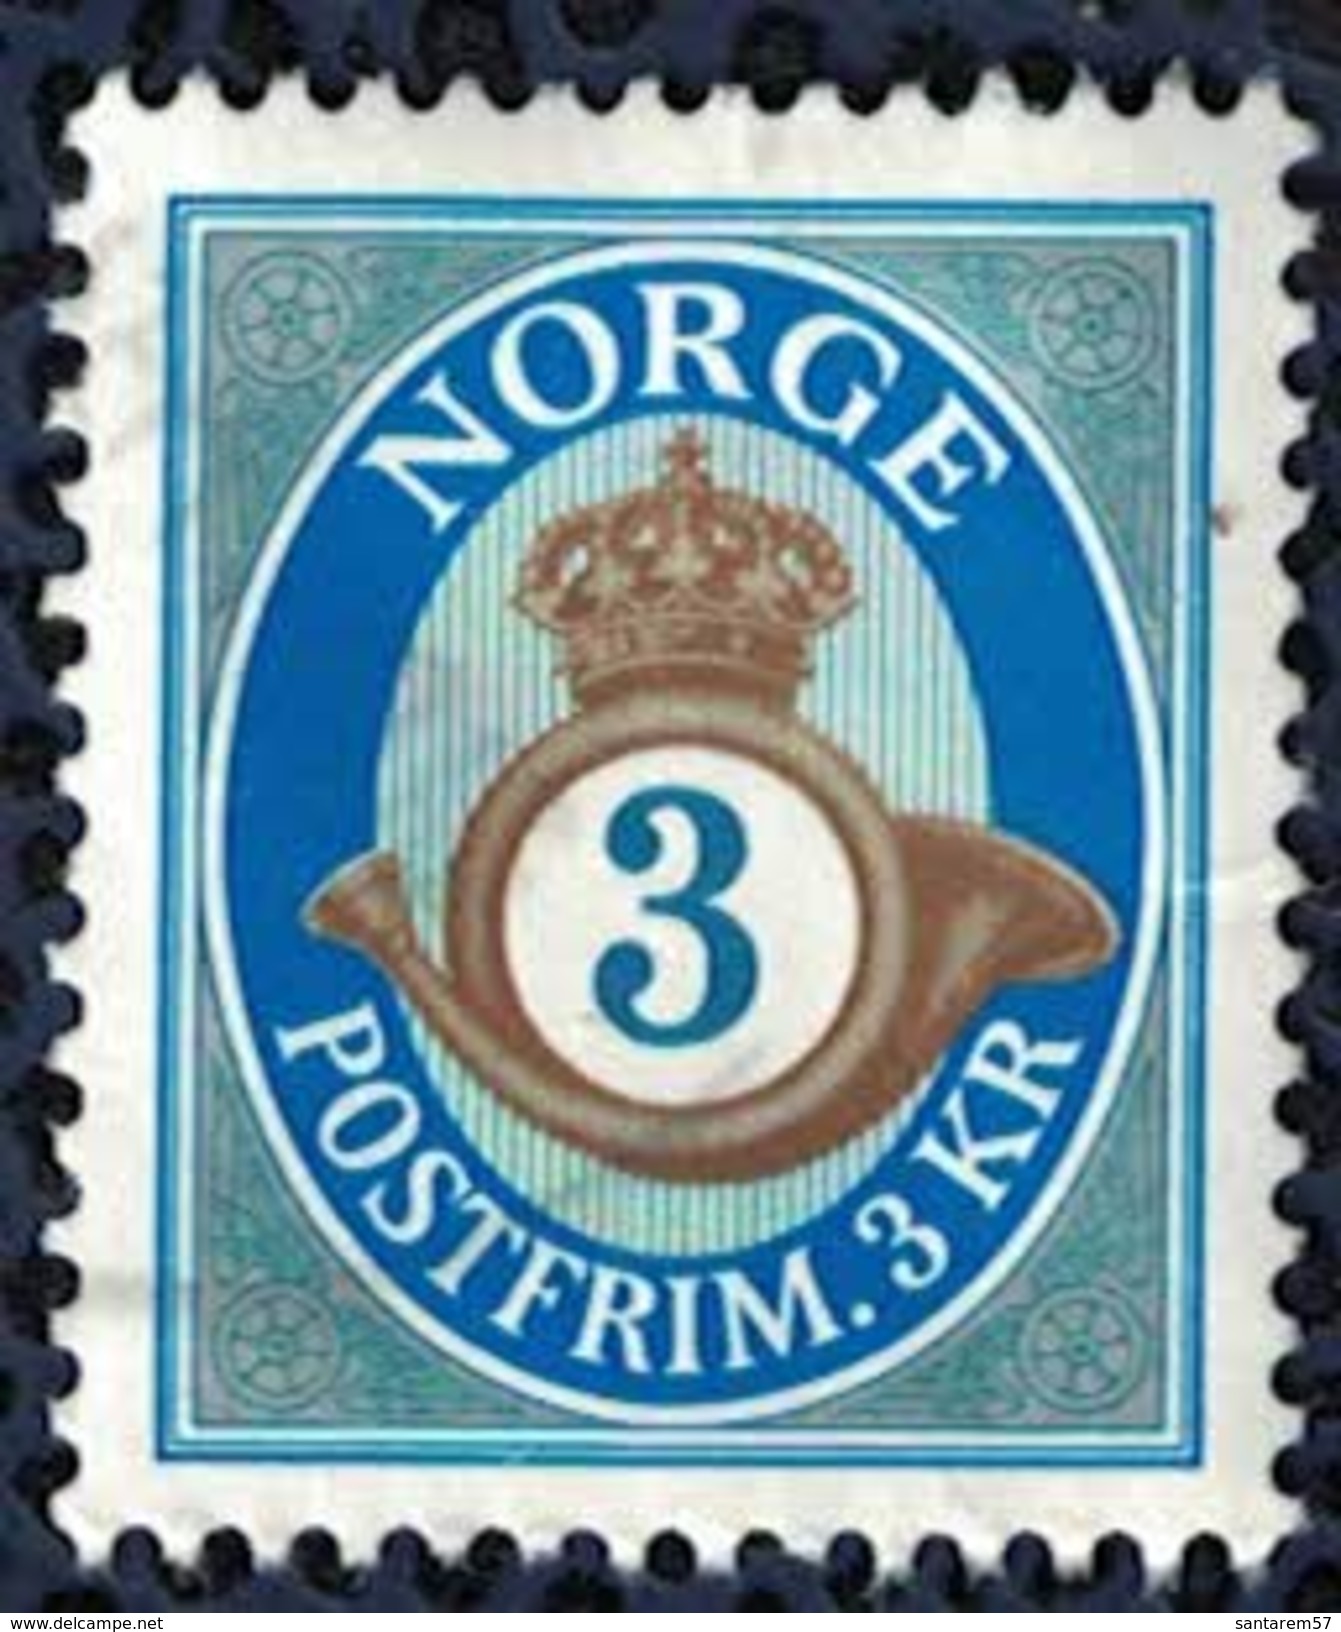 Norvège 2005 Oblitéré Used Postfrim 3 Kr Corne Postale SU - Used Stamps